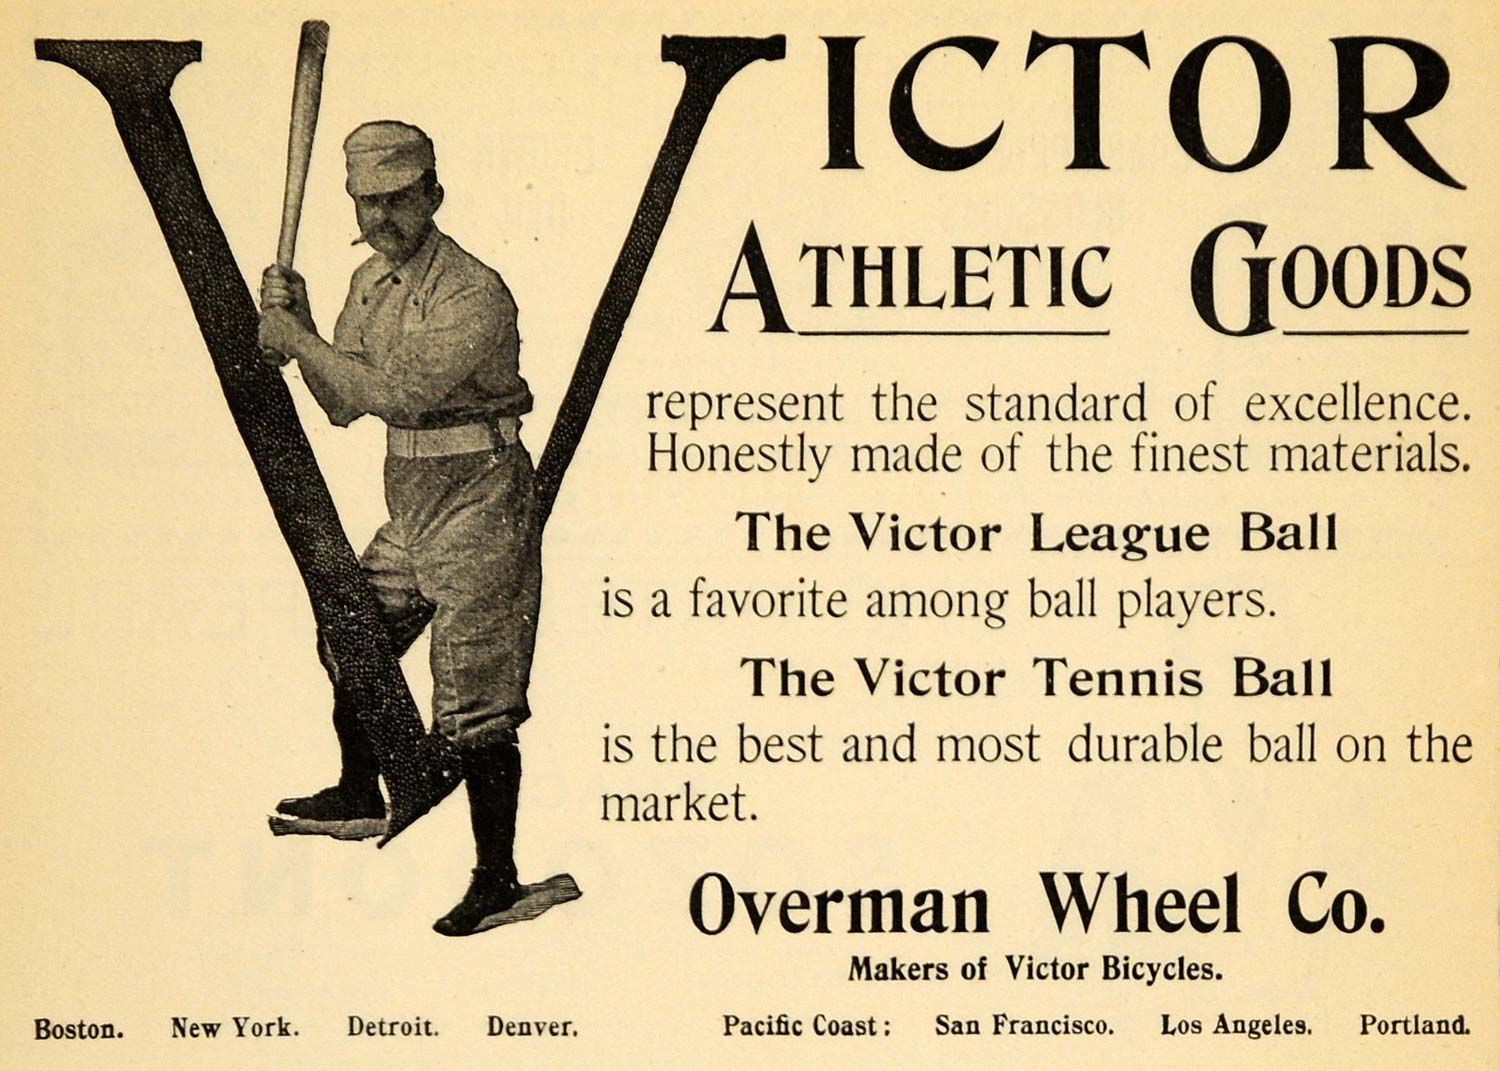 1895 Ad Victor Athletic Goods Overman Wheel Company - ORIGINAL ADVERTISING TFO1